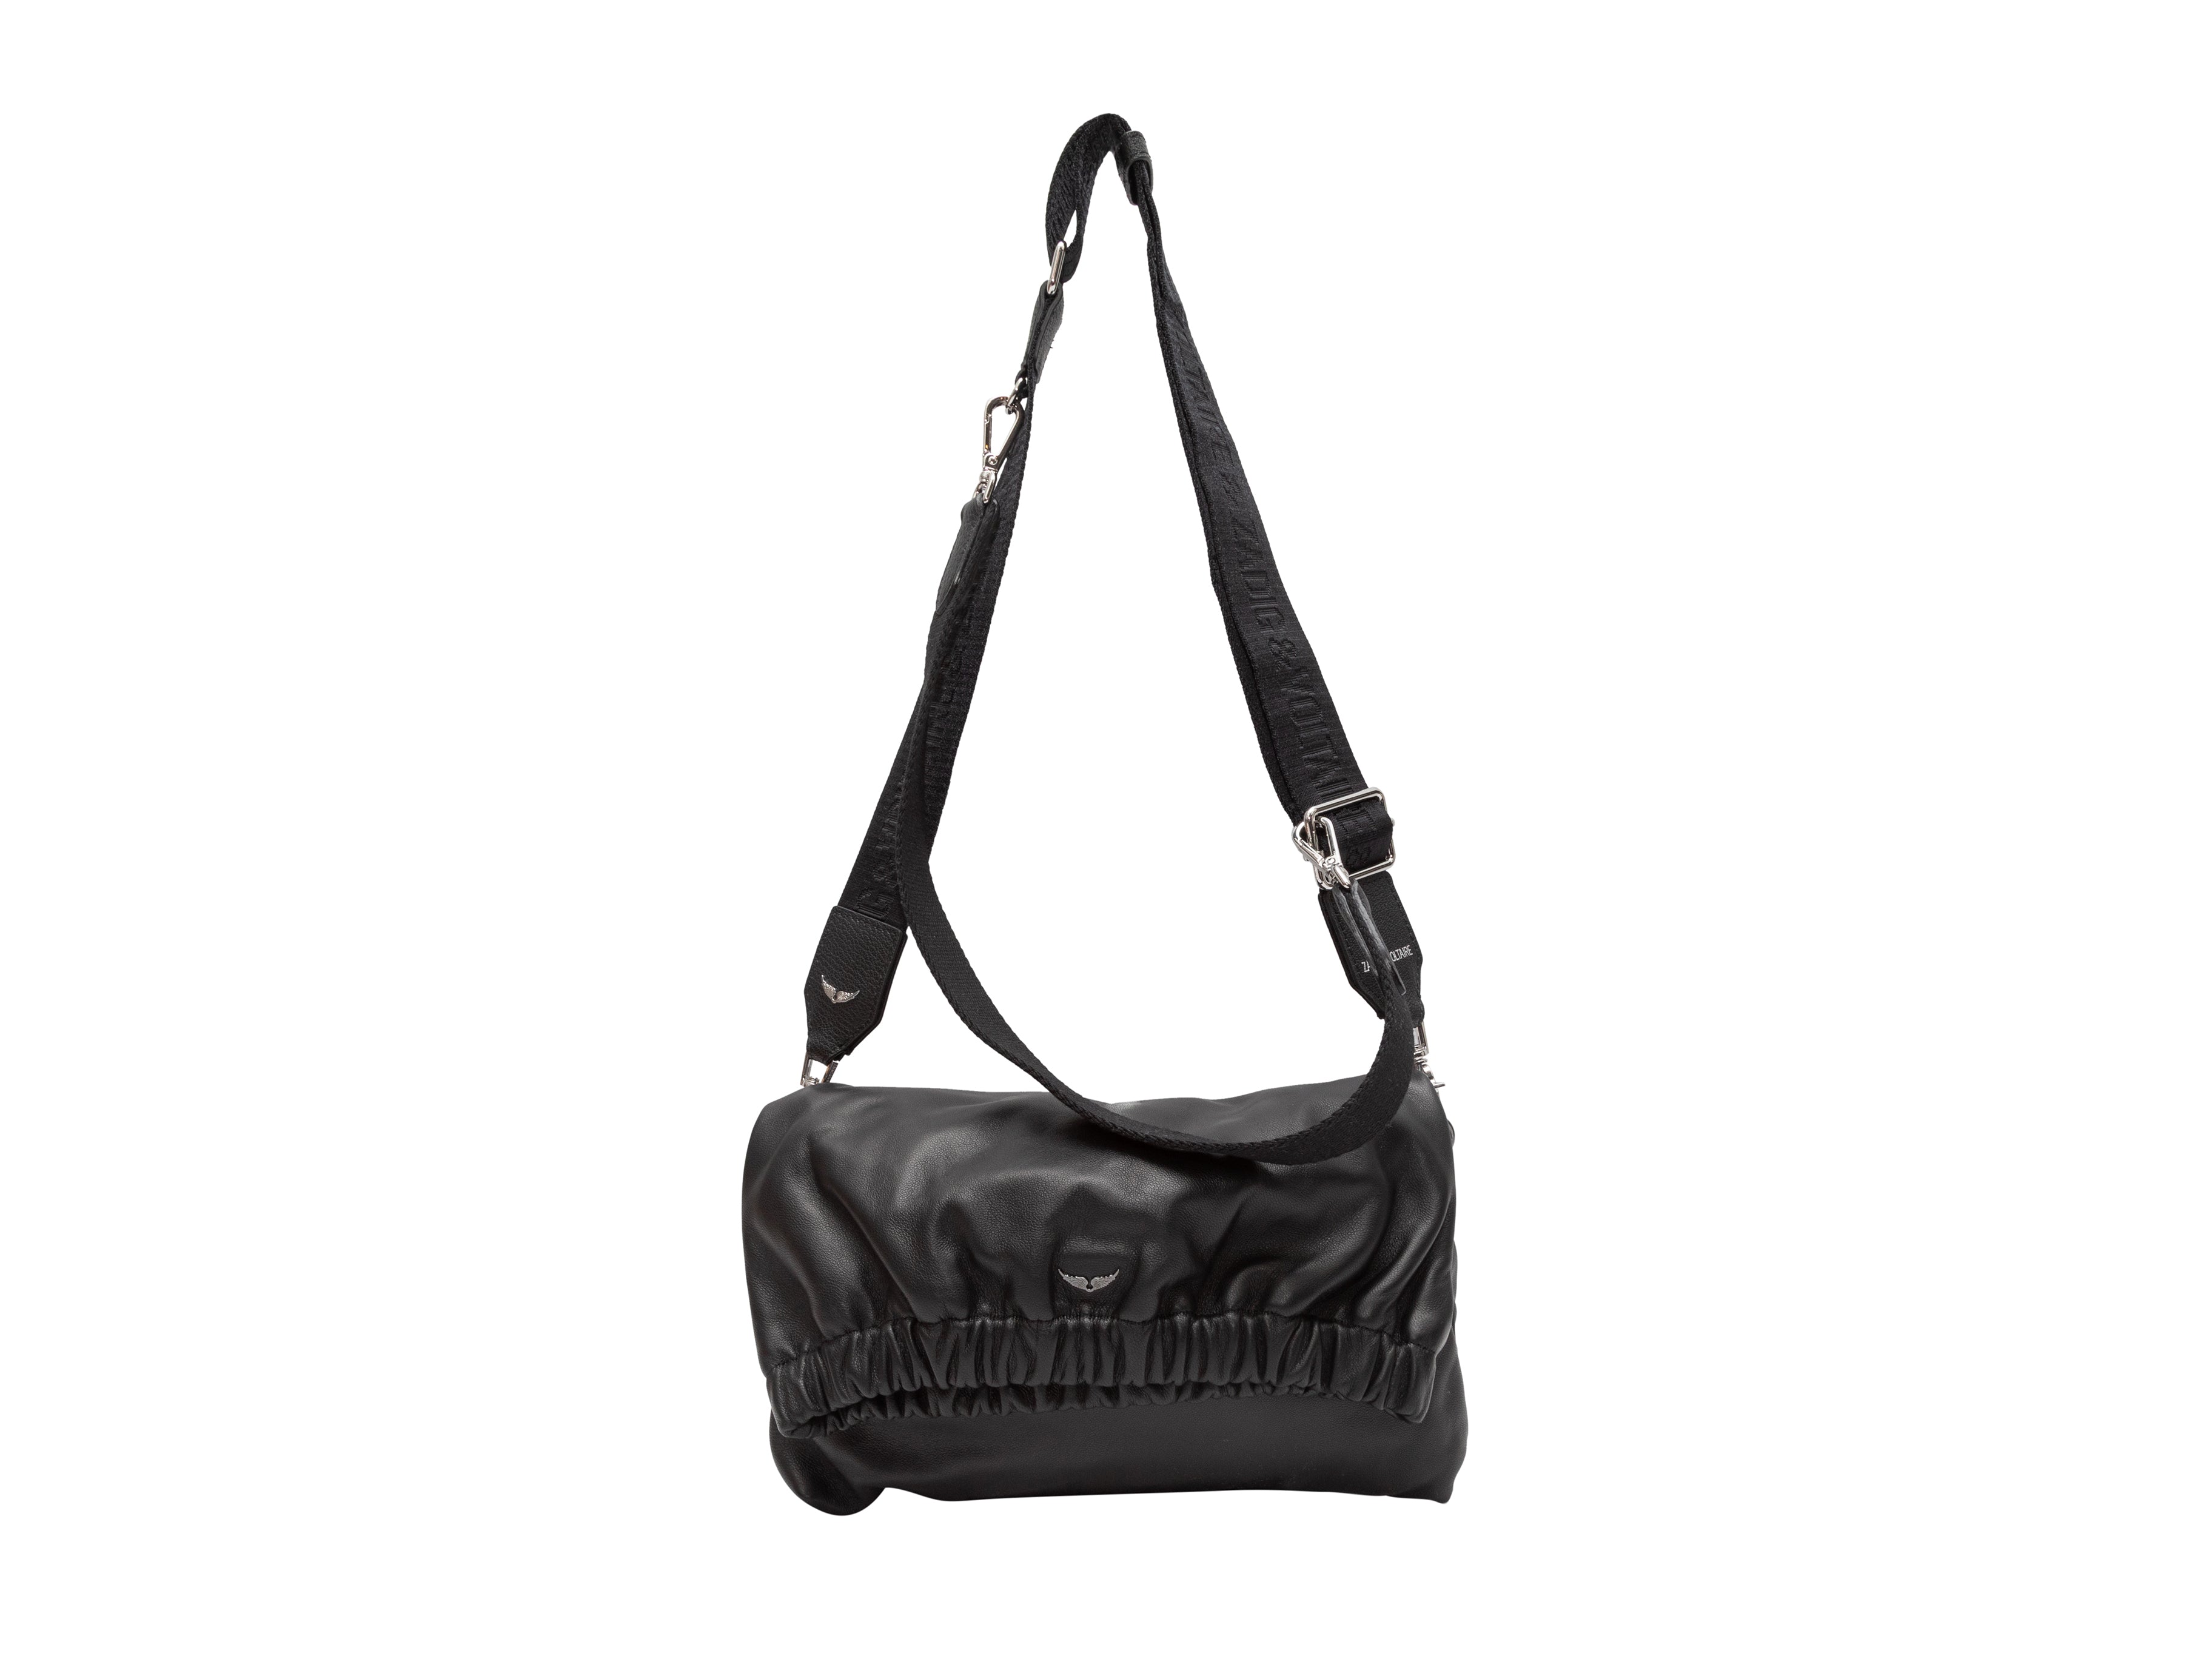 Zadig & Voltaire Authenticated Rock Clutch Bag